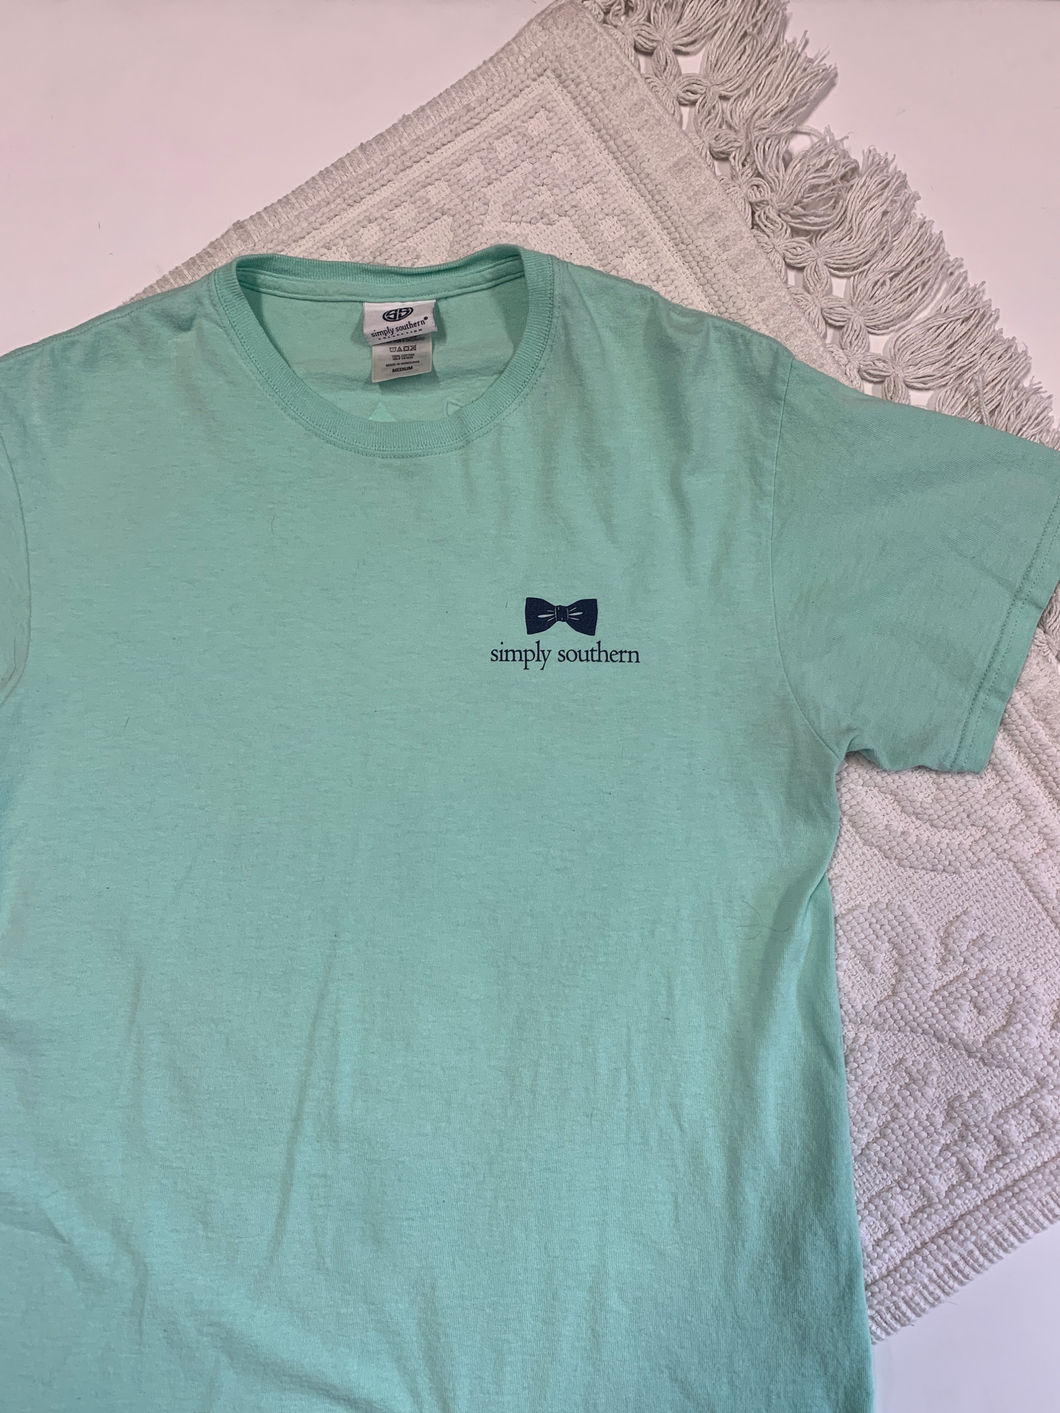 Simply Southern T-Shirt Size Medium